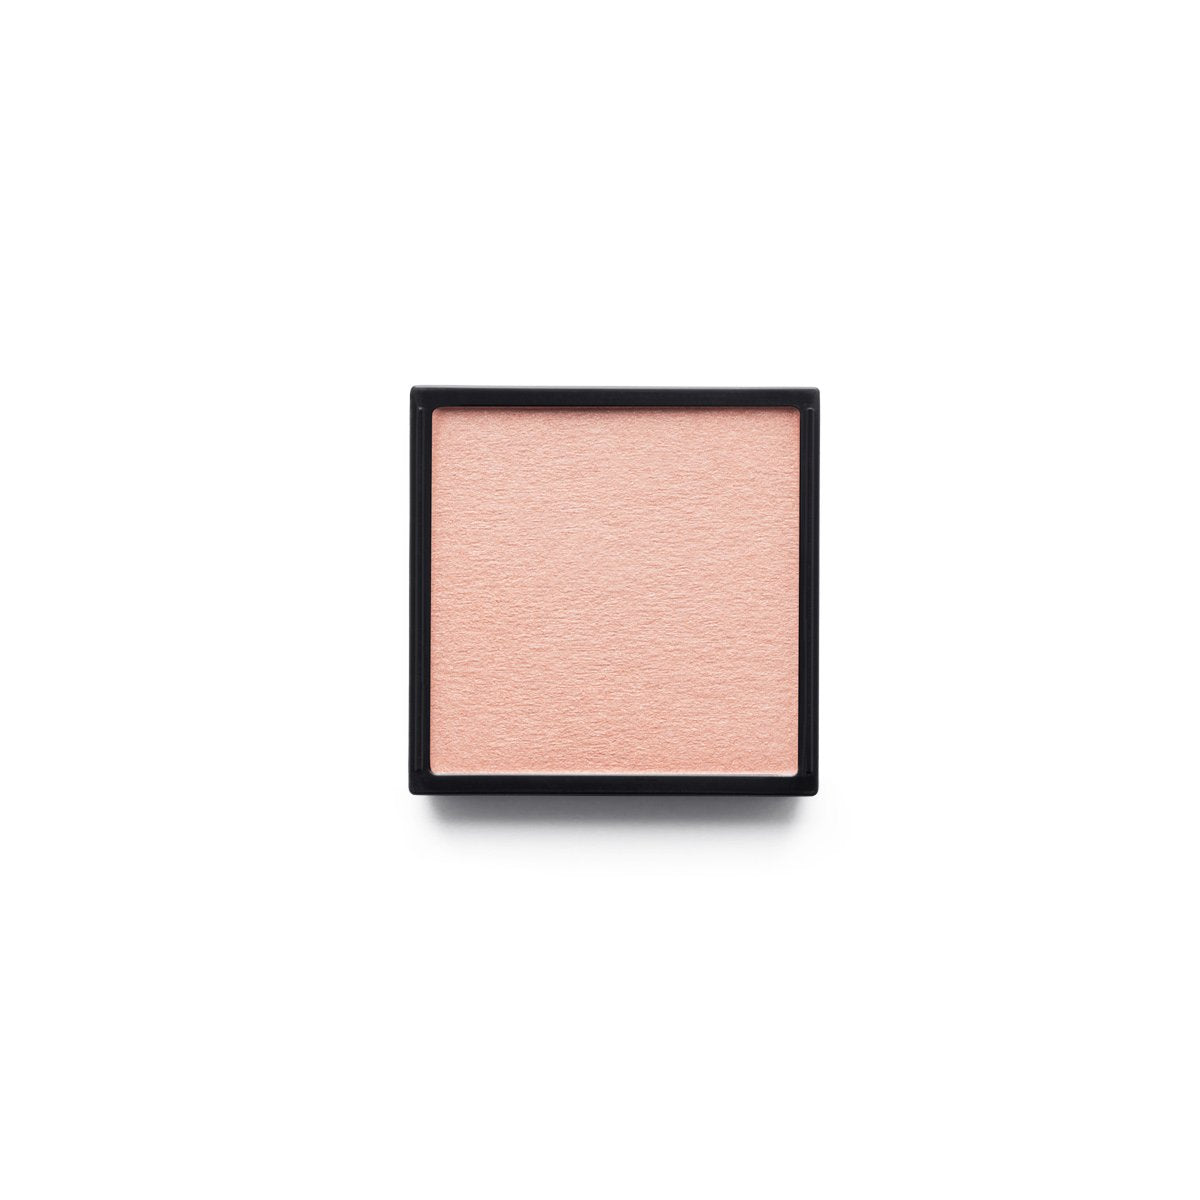 CORSAGE - MAUVE ROSE - matte finish eyeshadow in mauve rose shade 